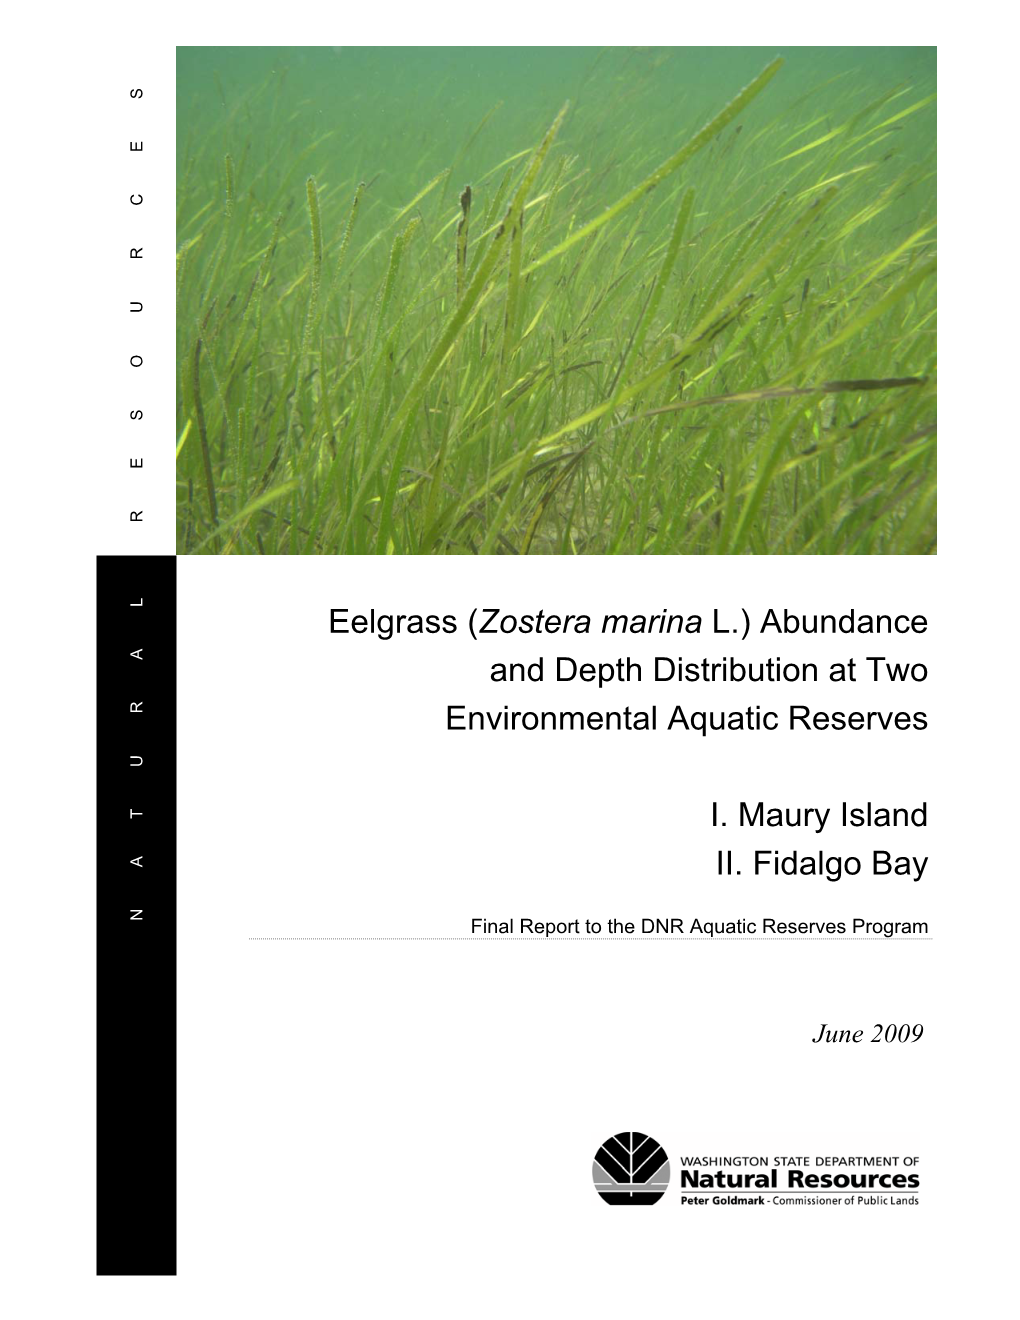 Eelgrass (Zostera Marina L.) Abundance and Depth Distribution at Two Environmental Aquatic Reserves